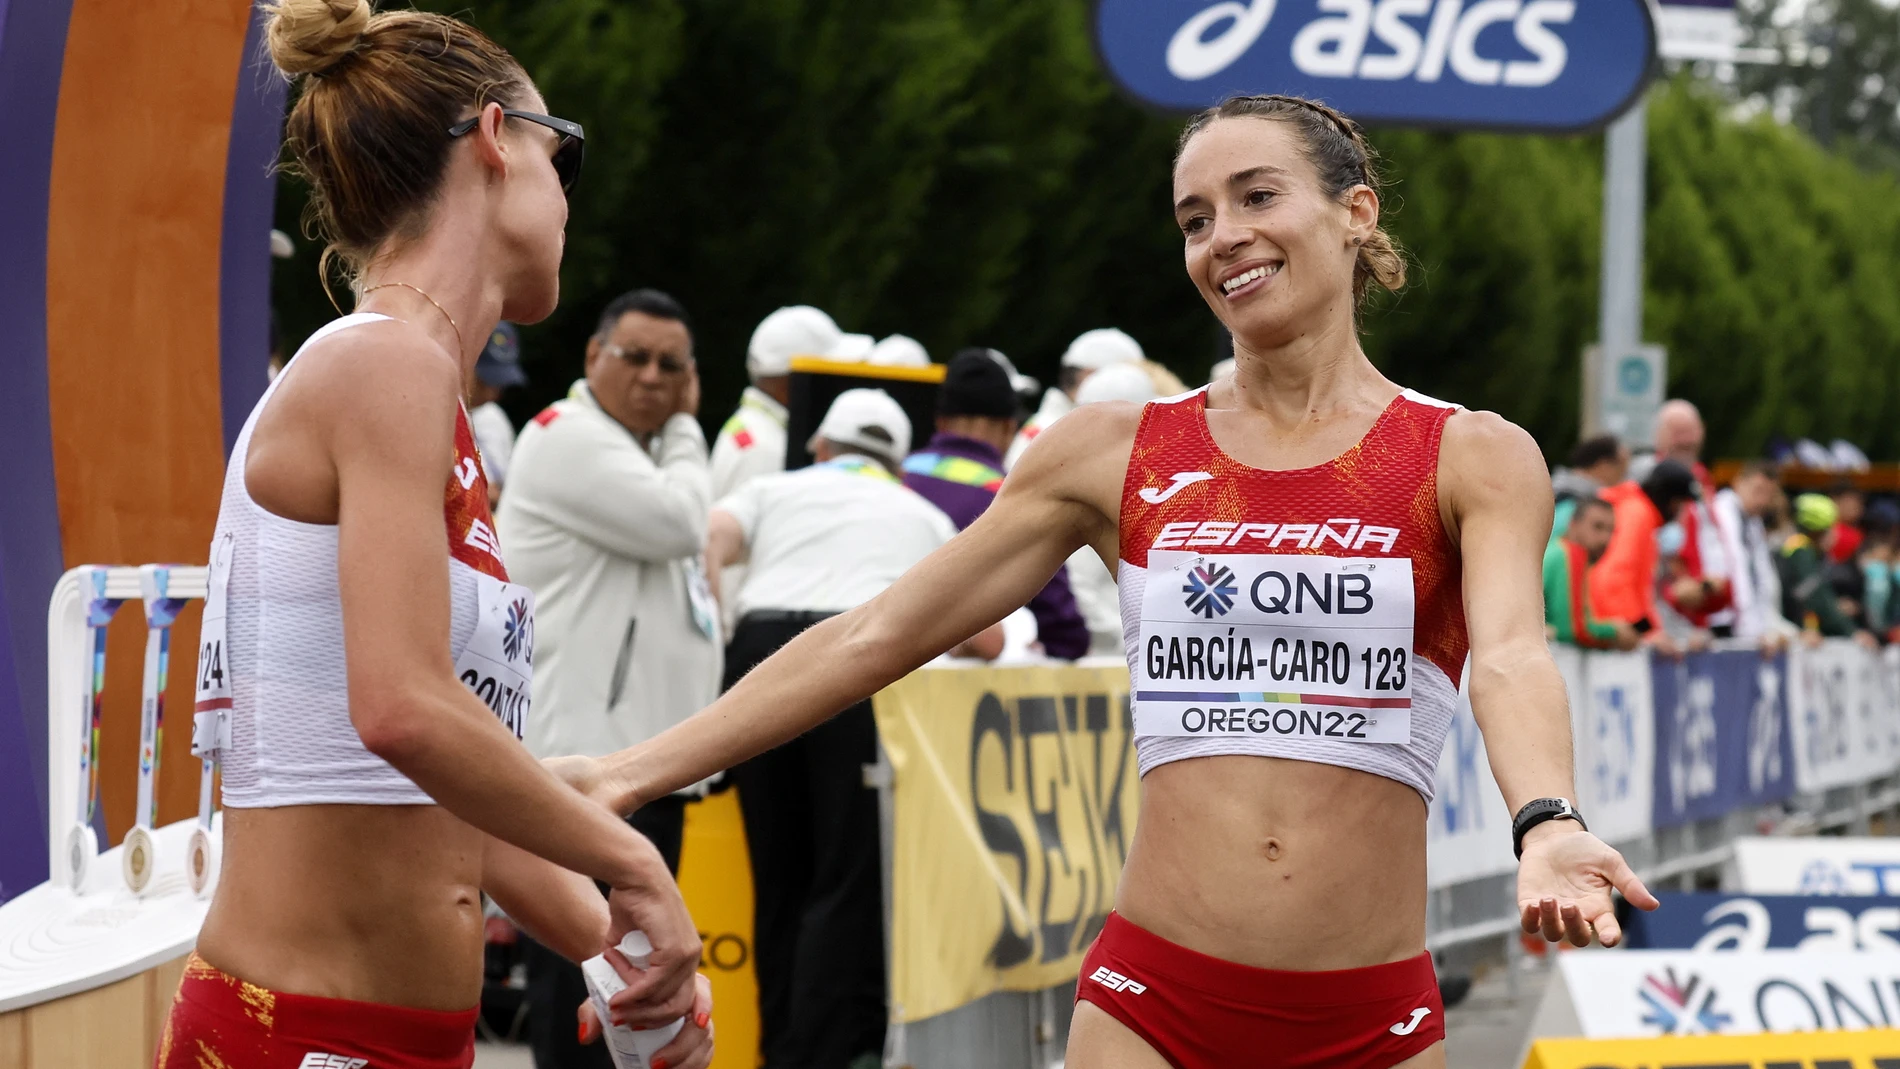 Raquel González, quinta en 35 kilómetros marcha del Mundial de Oregón, a punto de abrazar a Laura García Caro, que fue sexta